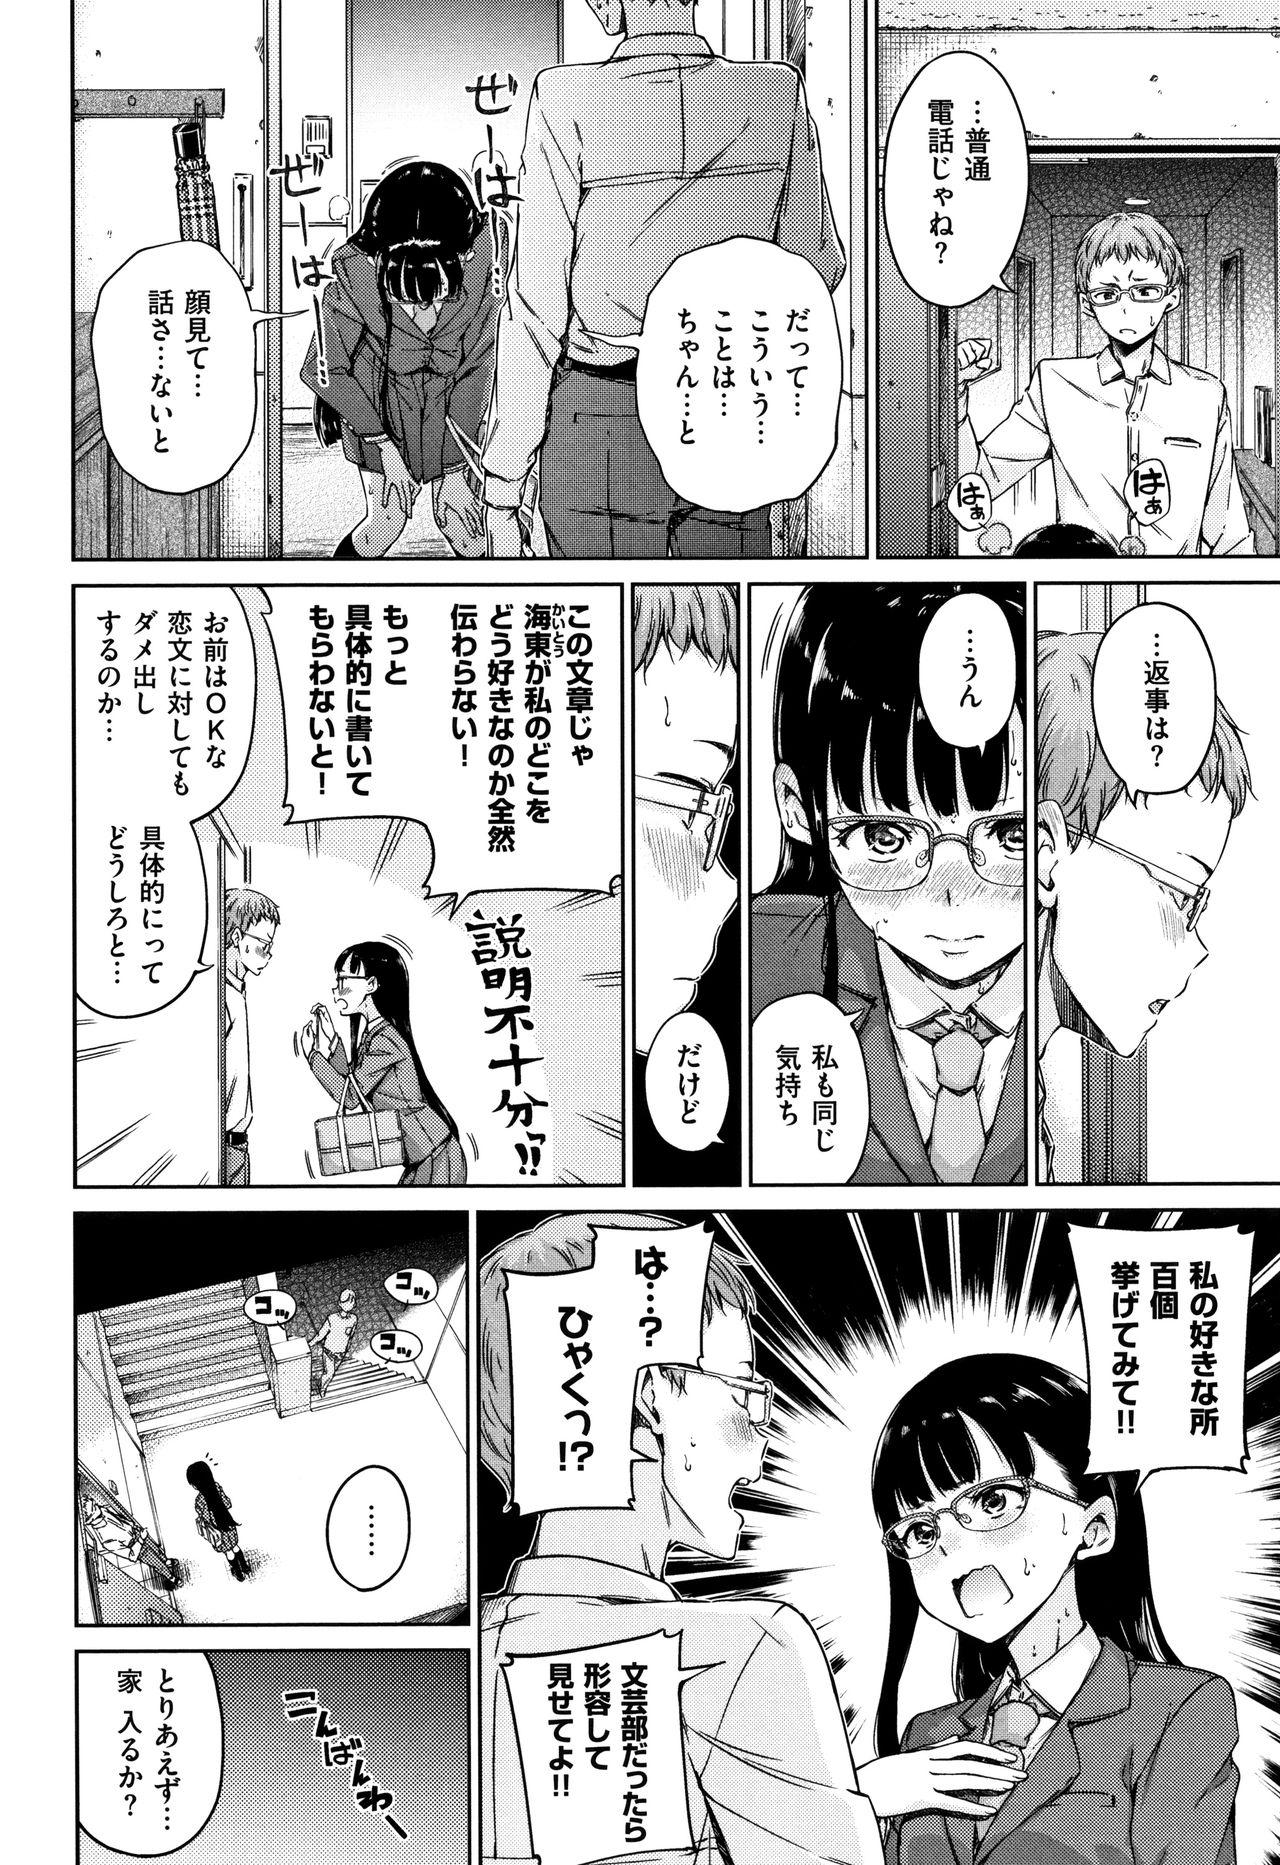 Fist Atatakakute Yawarakakute Scene - Page 9